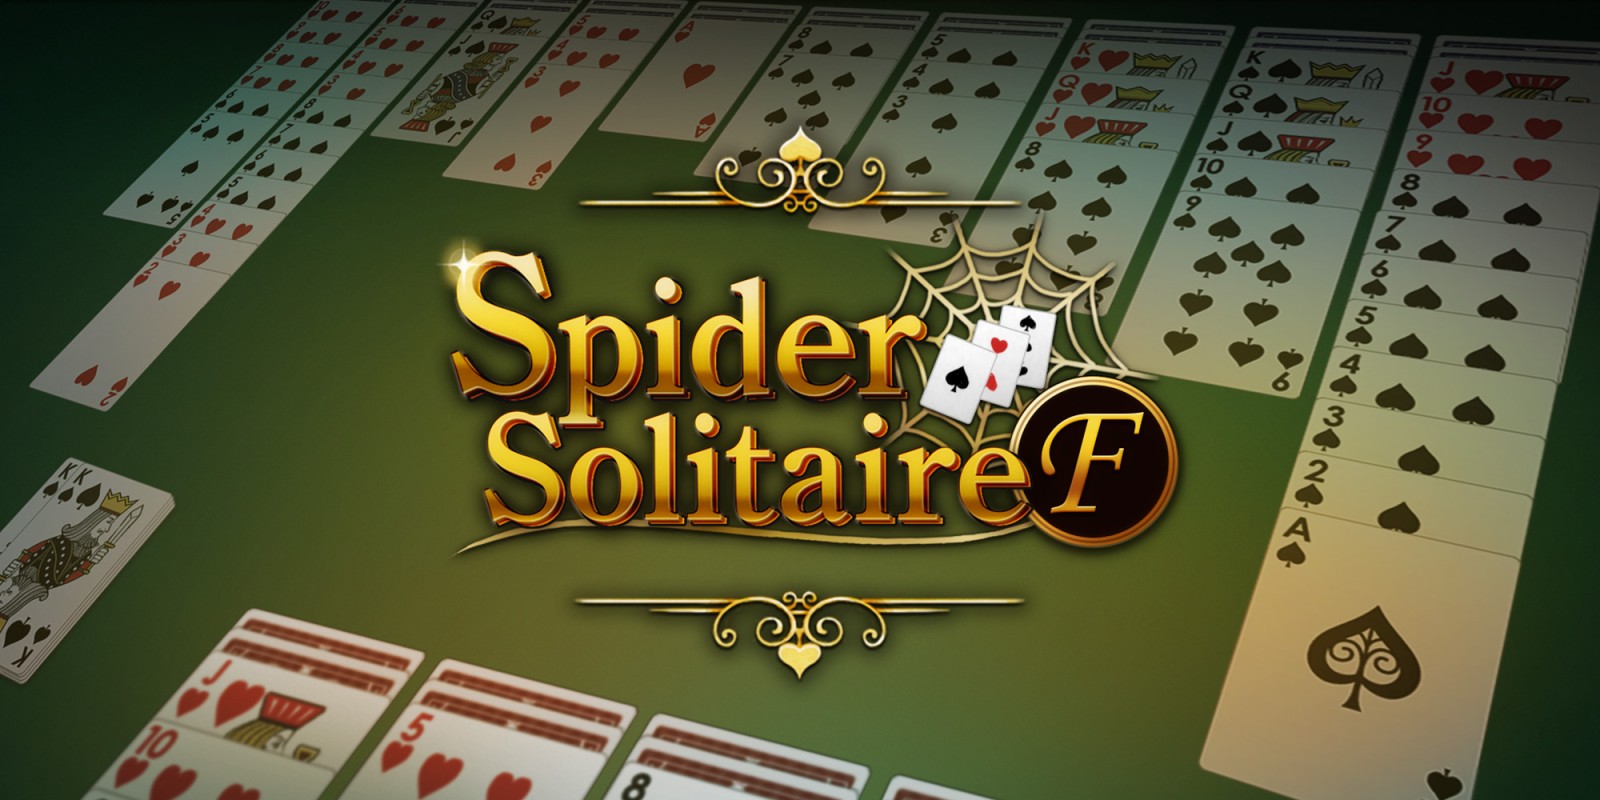 Spider Solitaire F | Programas descargables Nintendo Switch ...